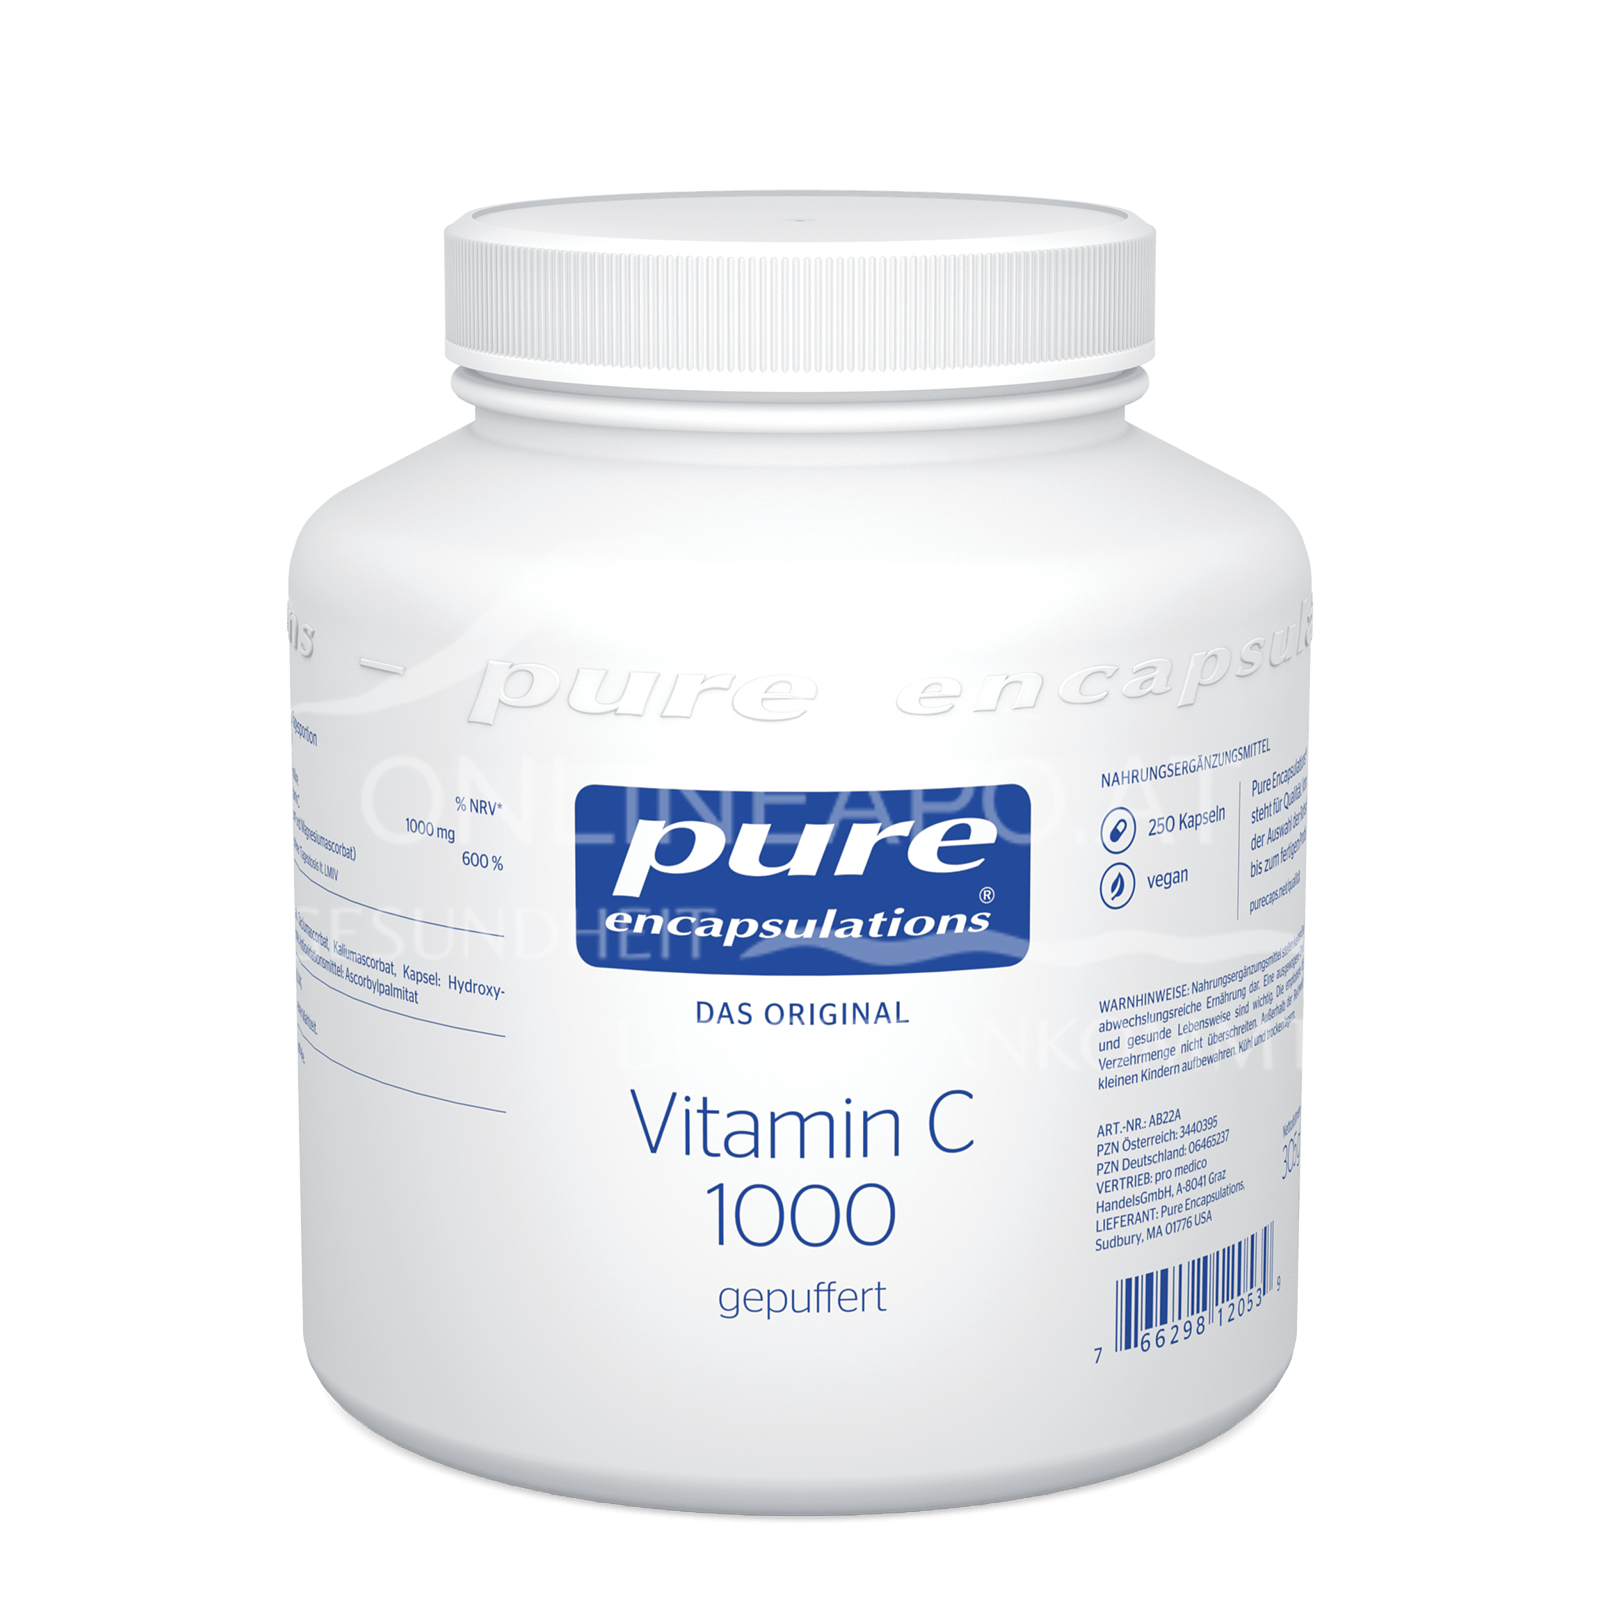 pure encapsulations® Vitamin C 1000 gepuffert Kapseln